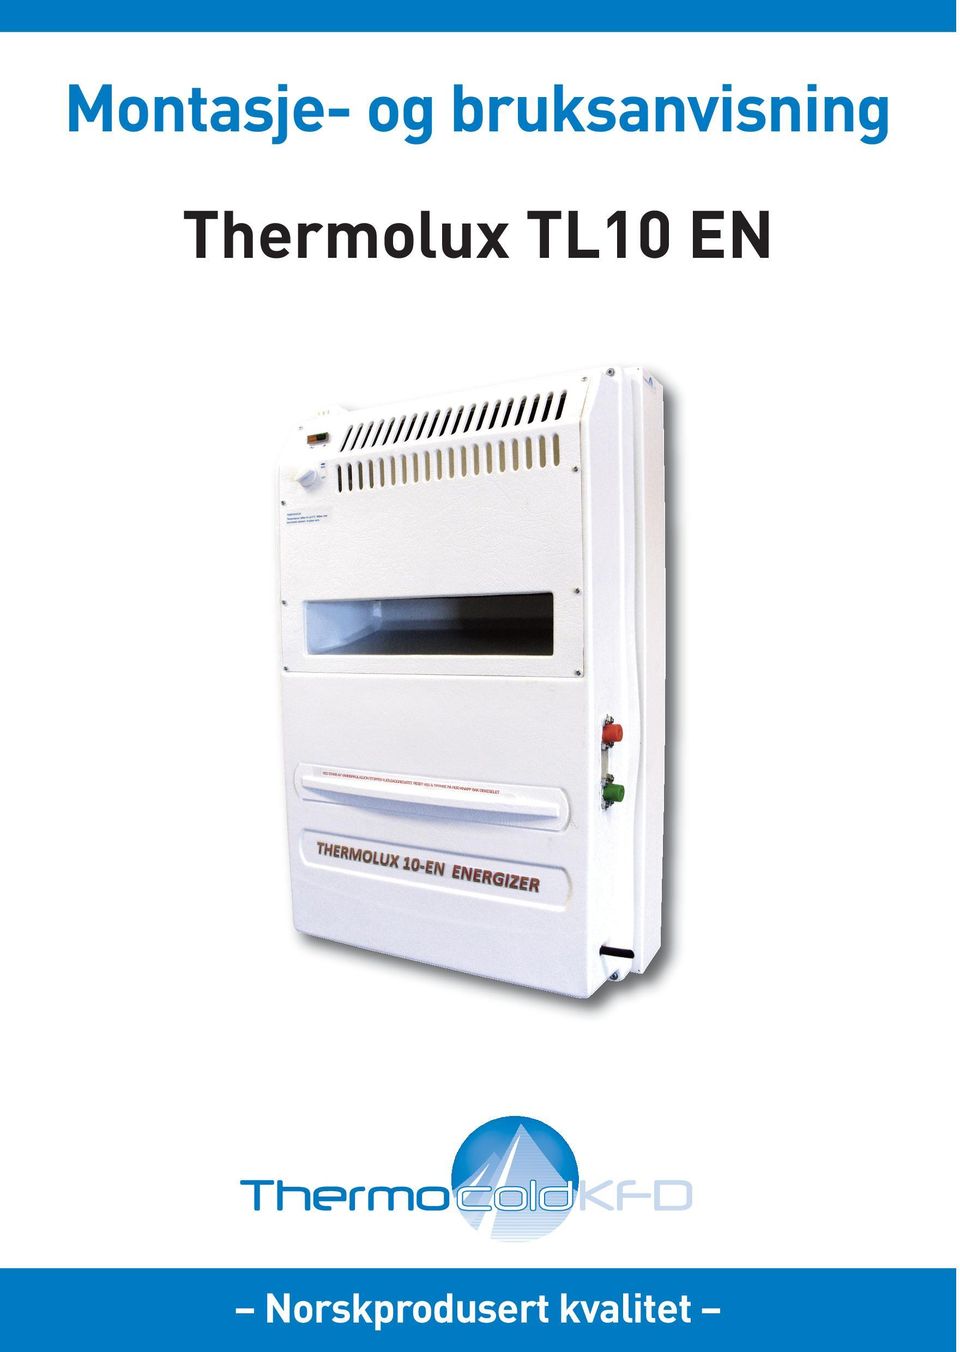 Thermolux TL10 EN